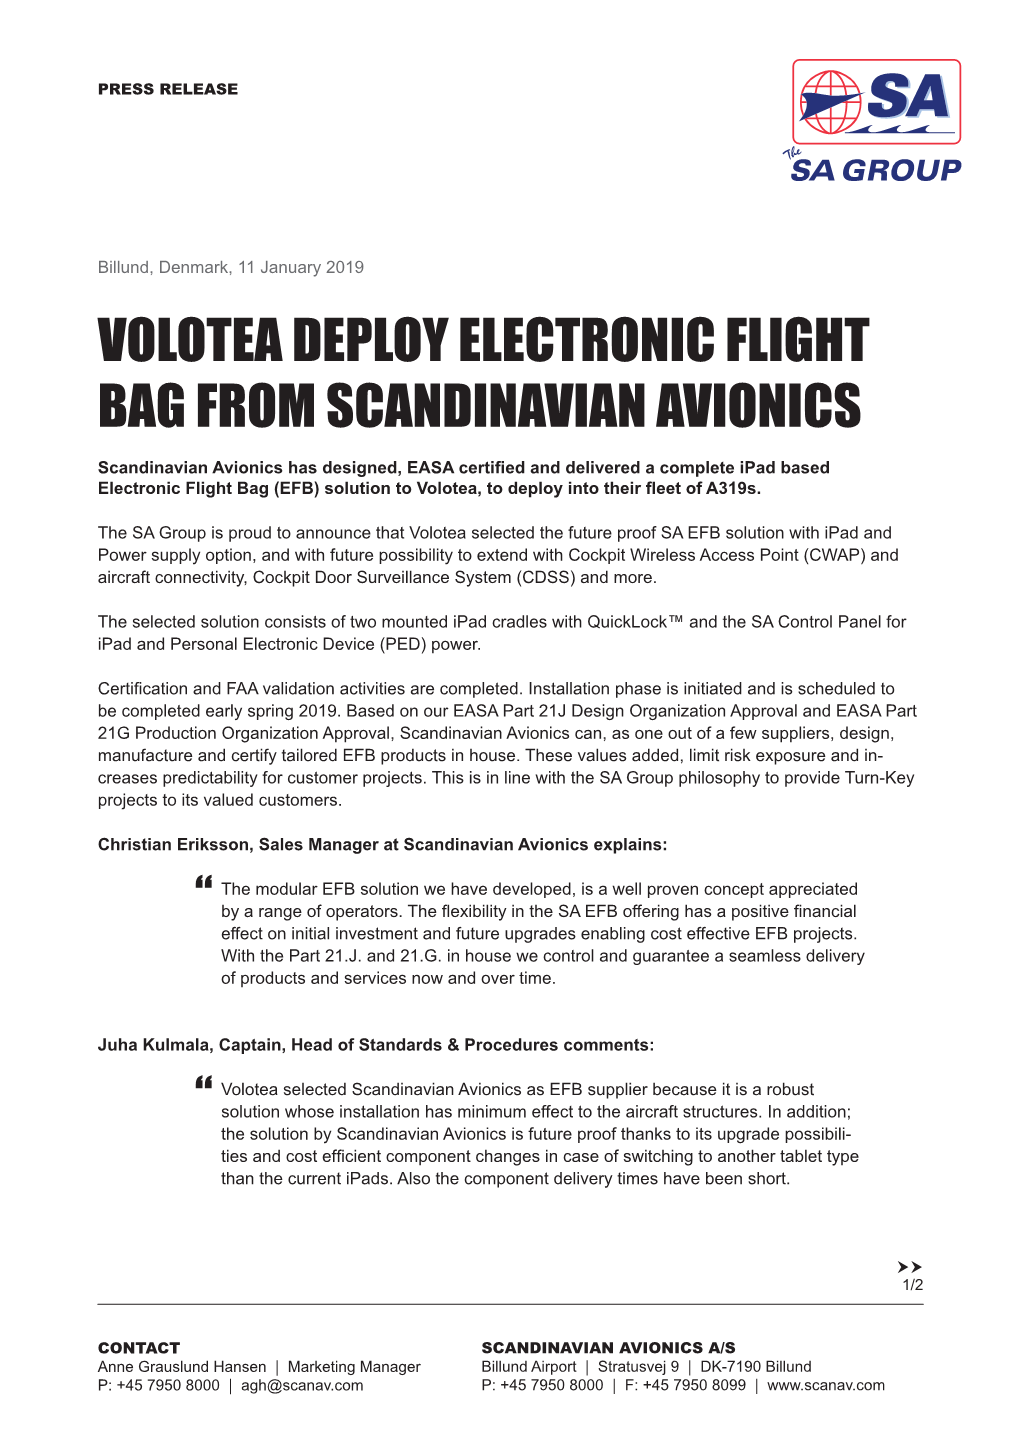 Volotea Deploy Electronic Flight Bag from Scandinavian Avionics